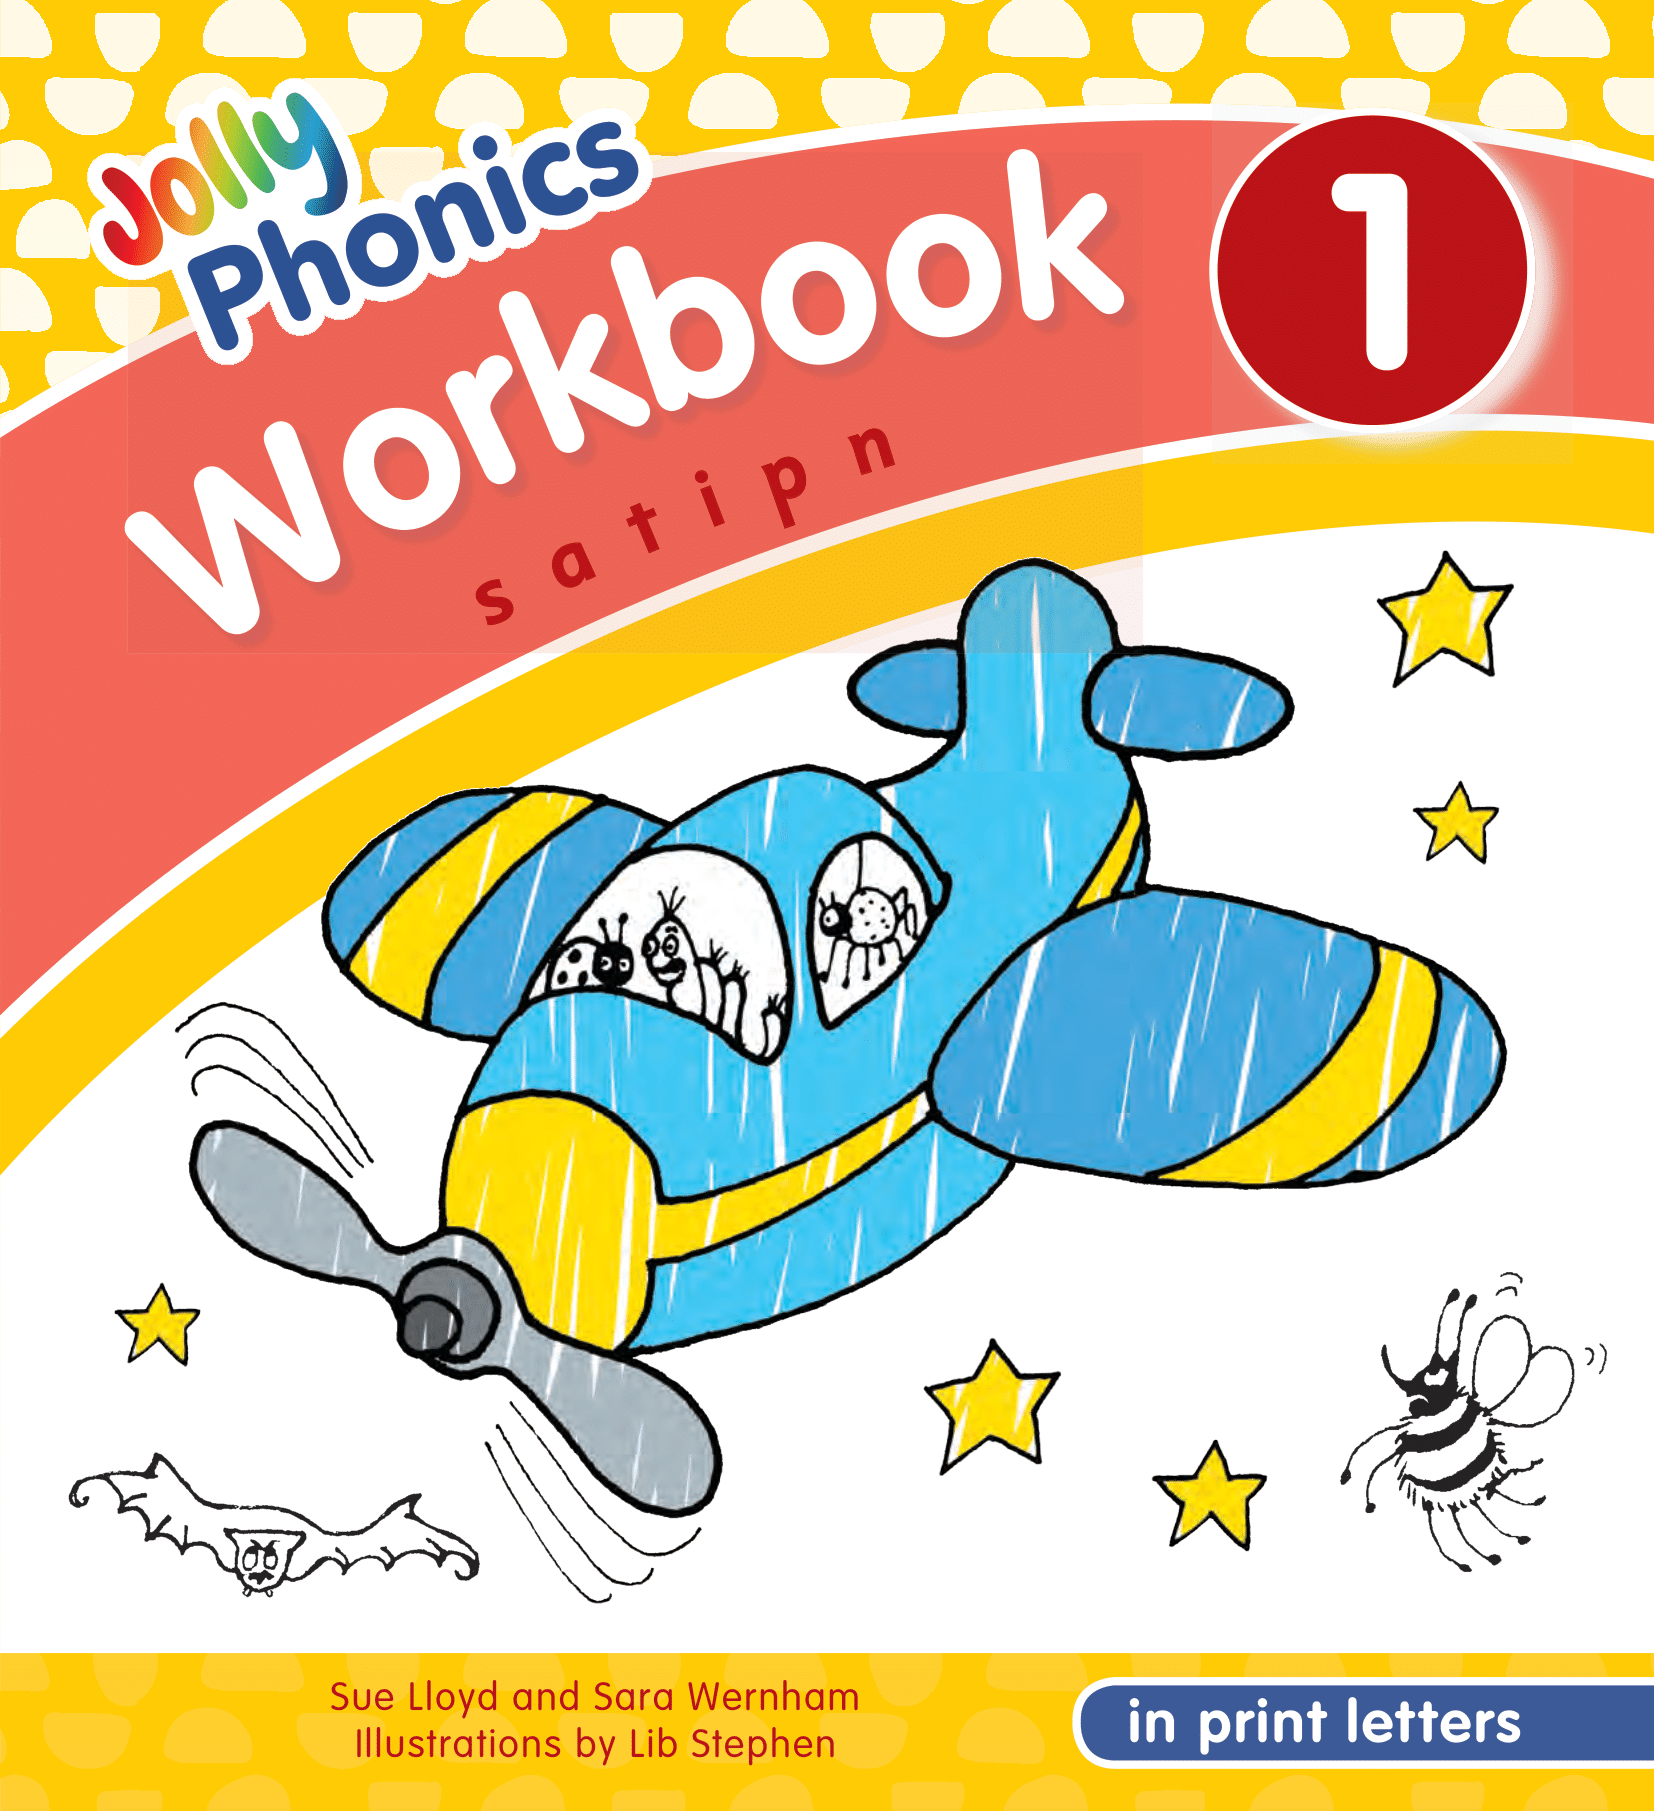 Jolly Phonics Workbook Set 1-7